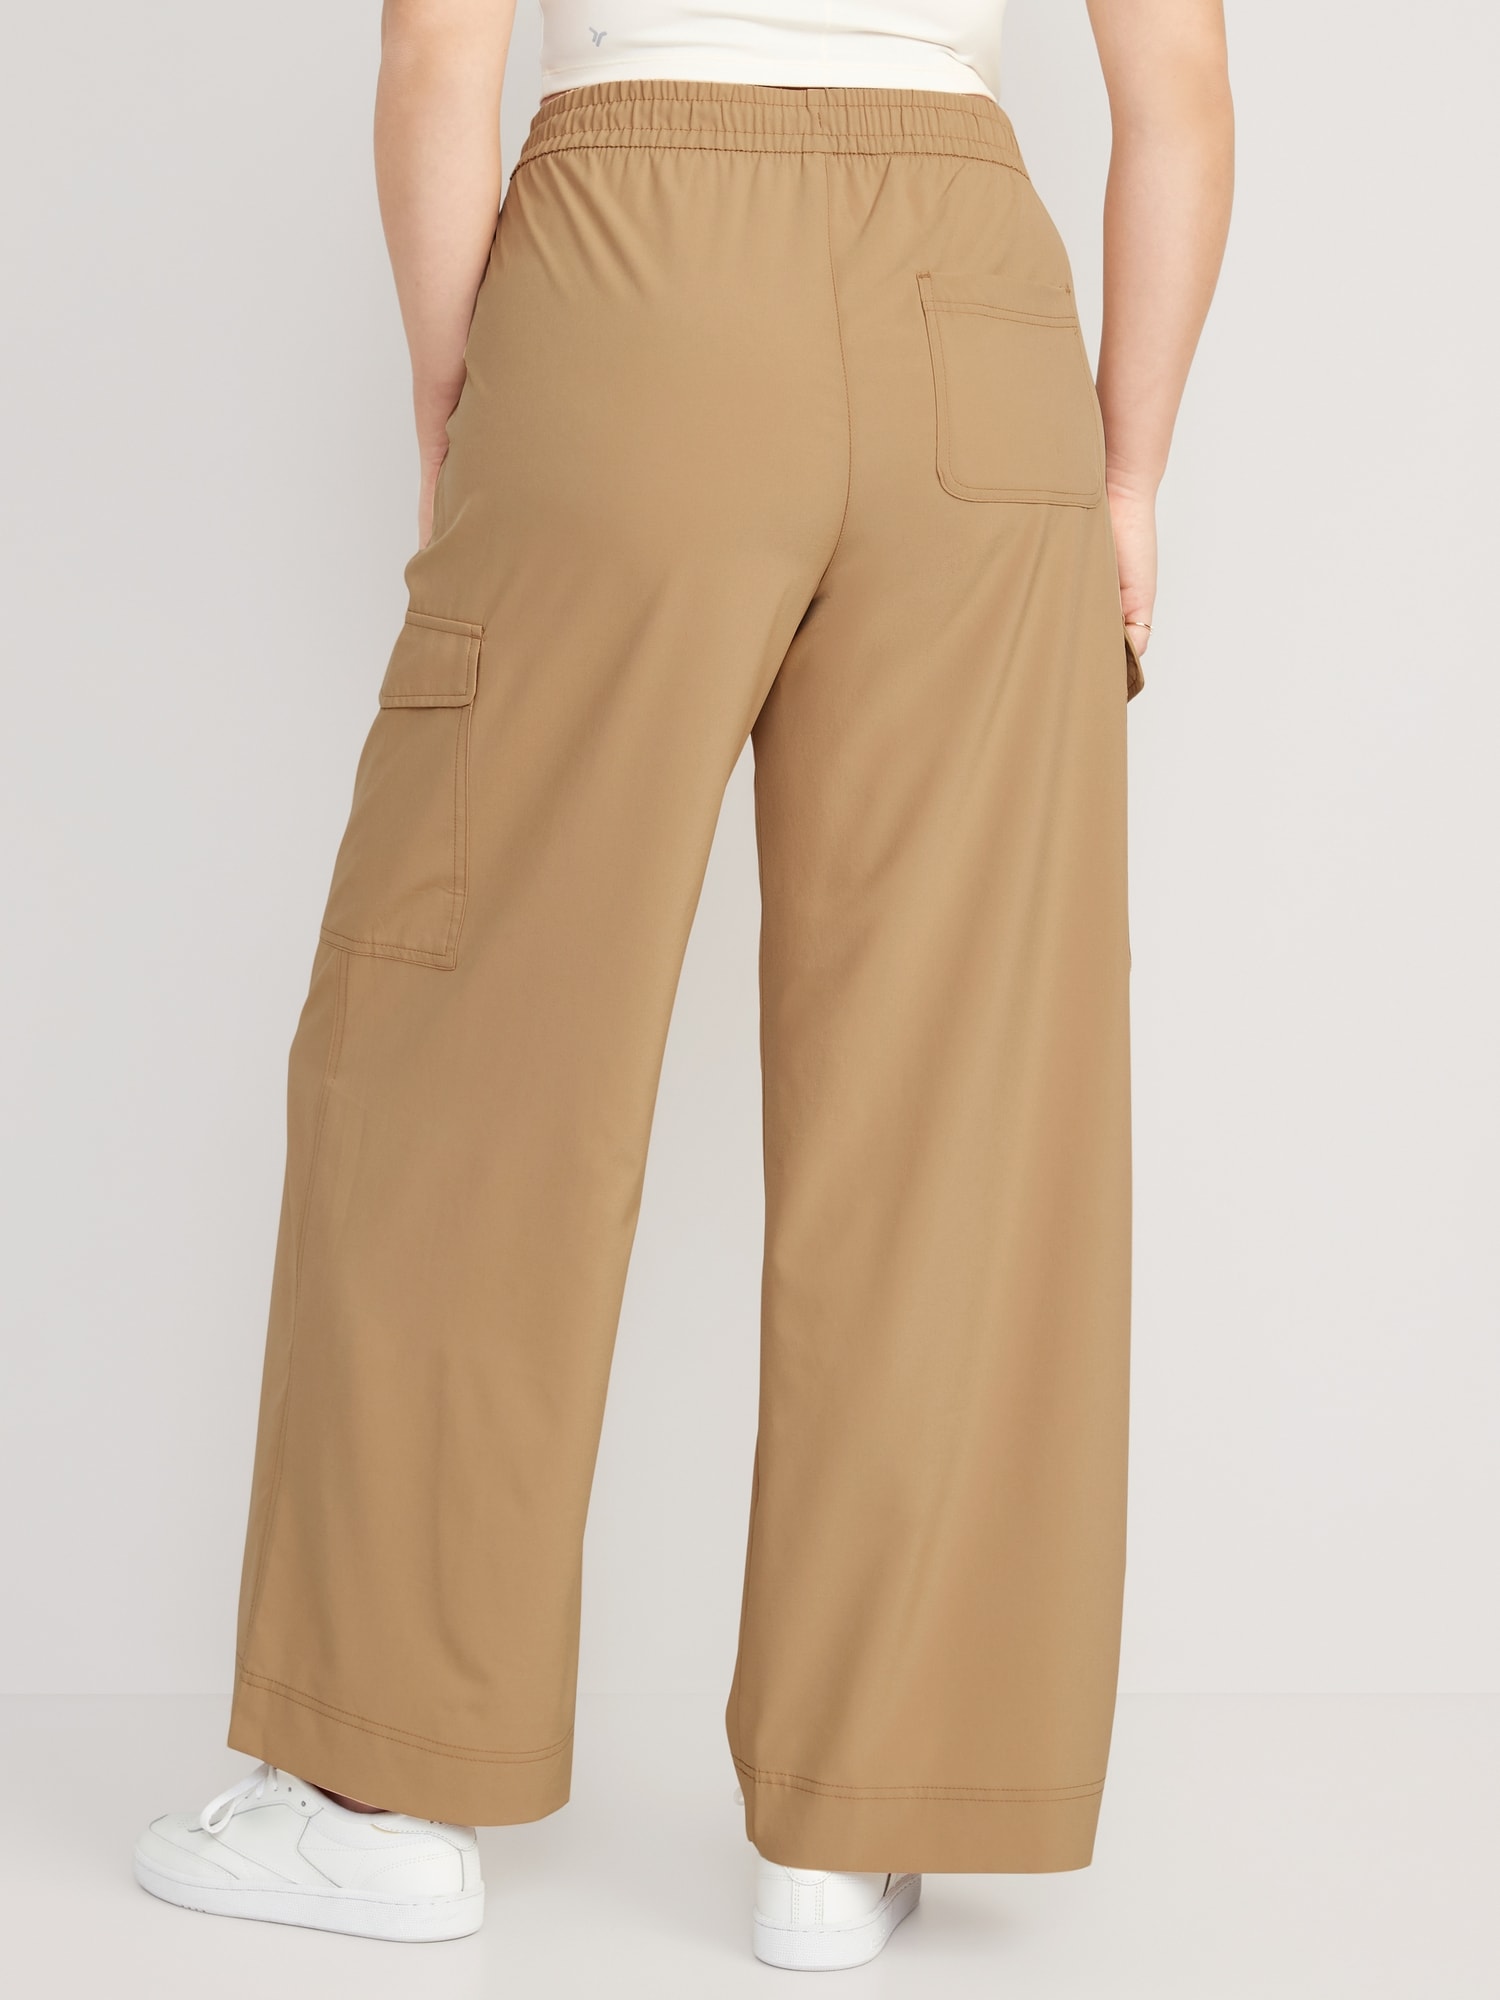 Flap Pockets Cinched Back 3/4 Length Pants - Gracia Fashion